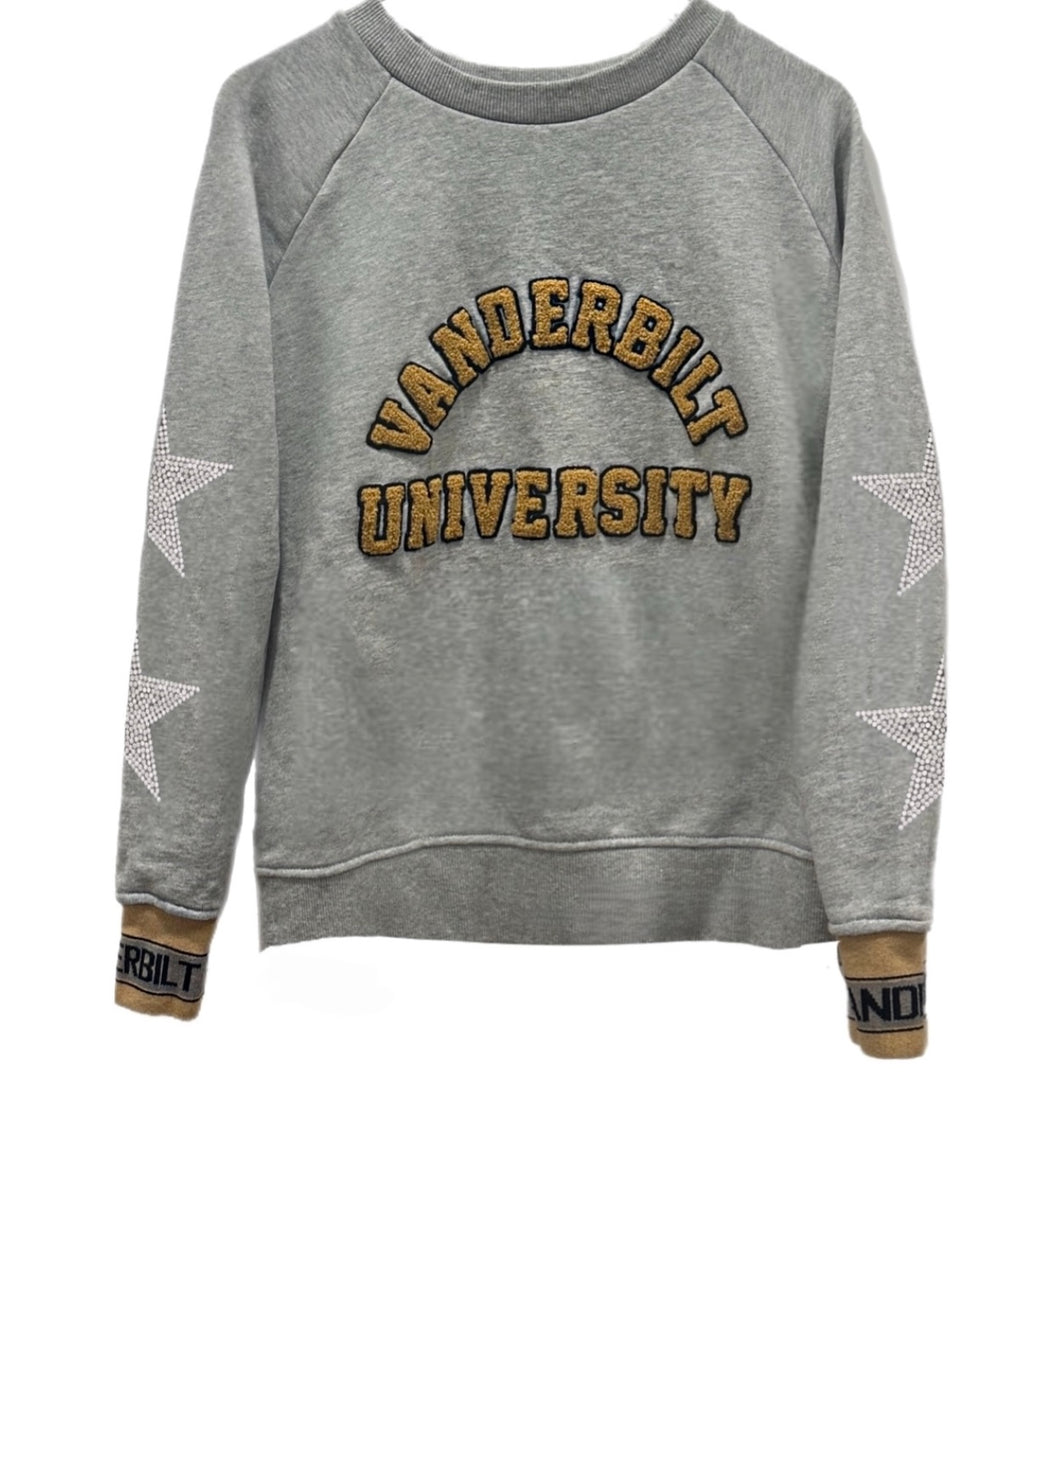 Vanderbilt University, One of a KIND Vintage “Rare Find” Sweatshirt with Crystal Star Design